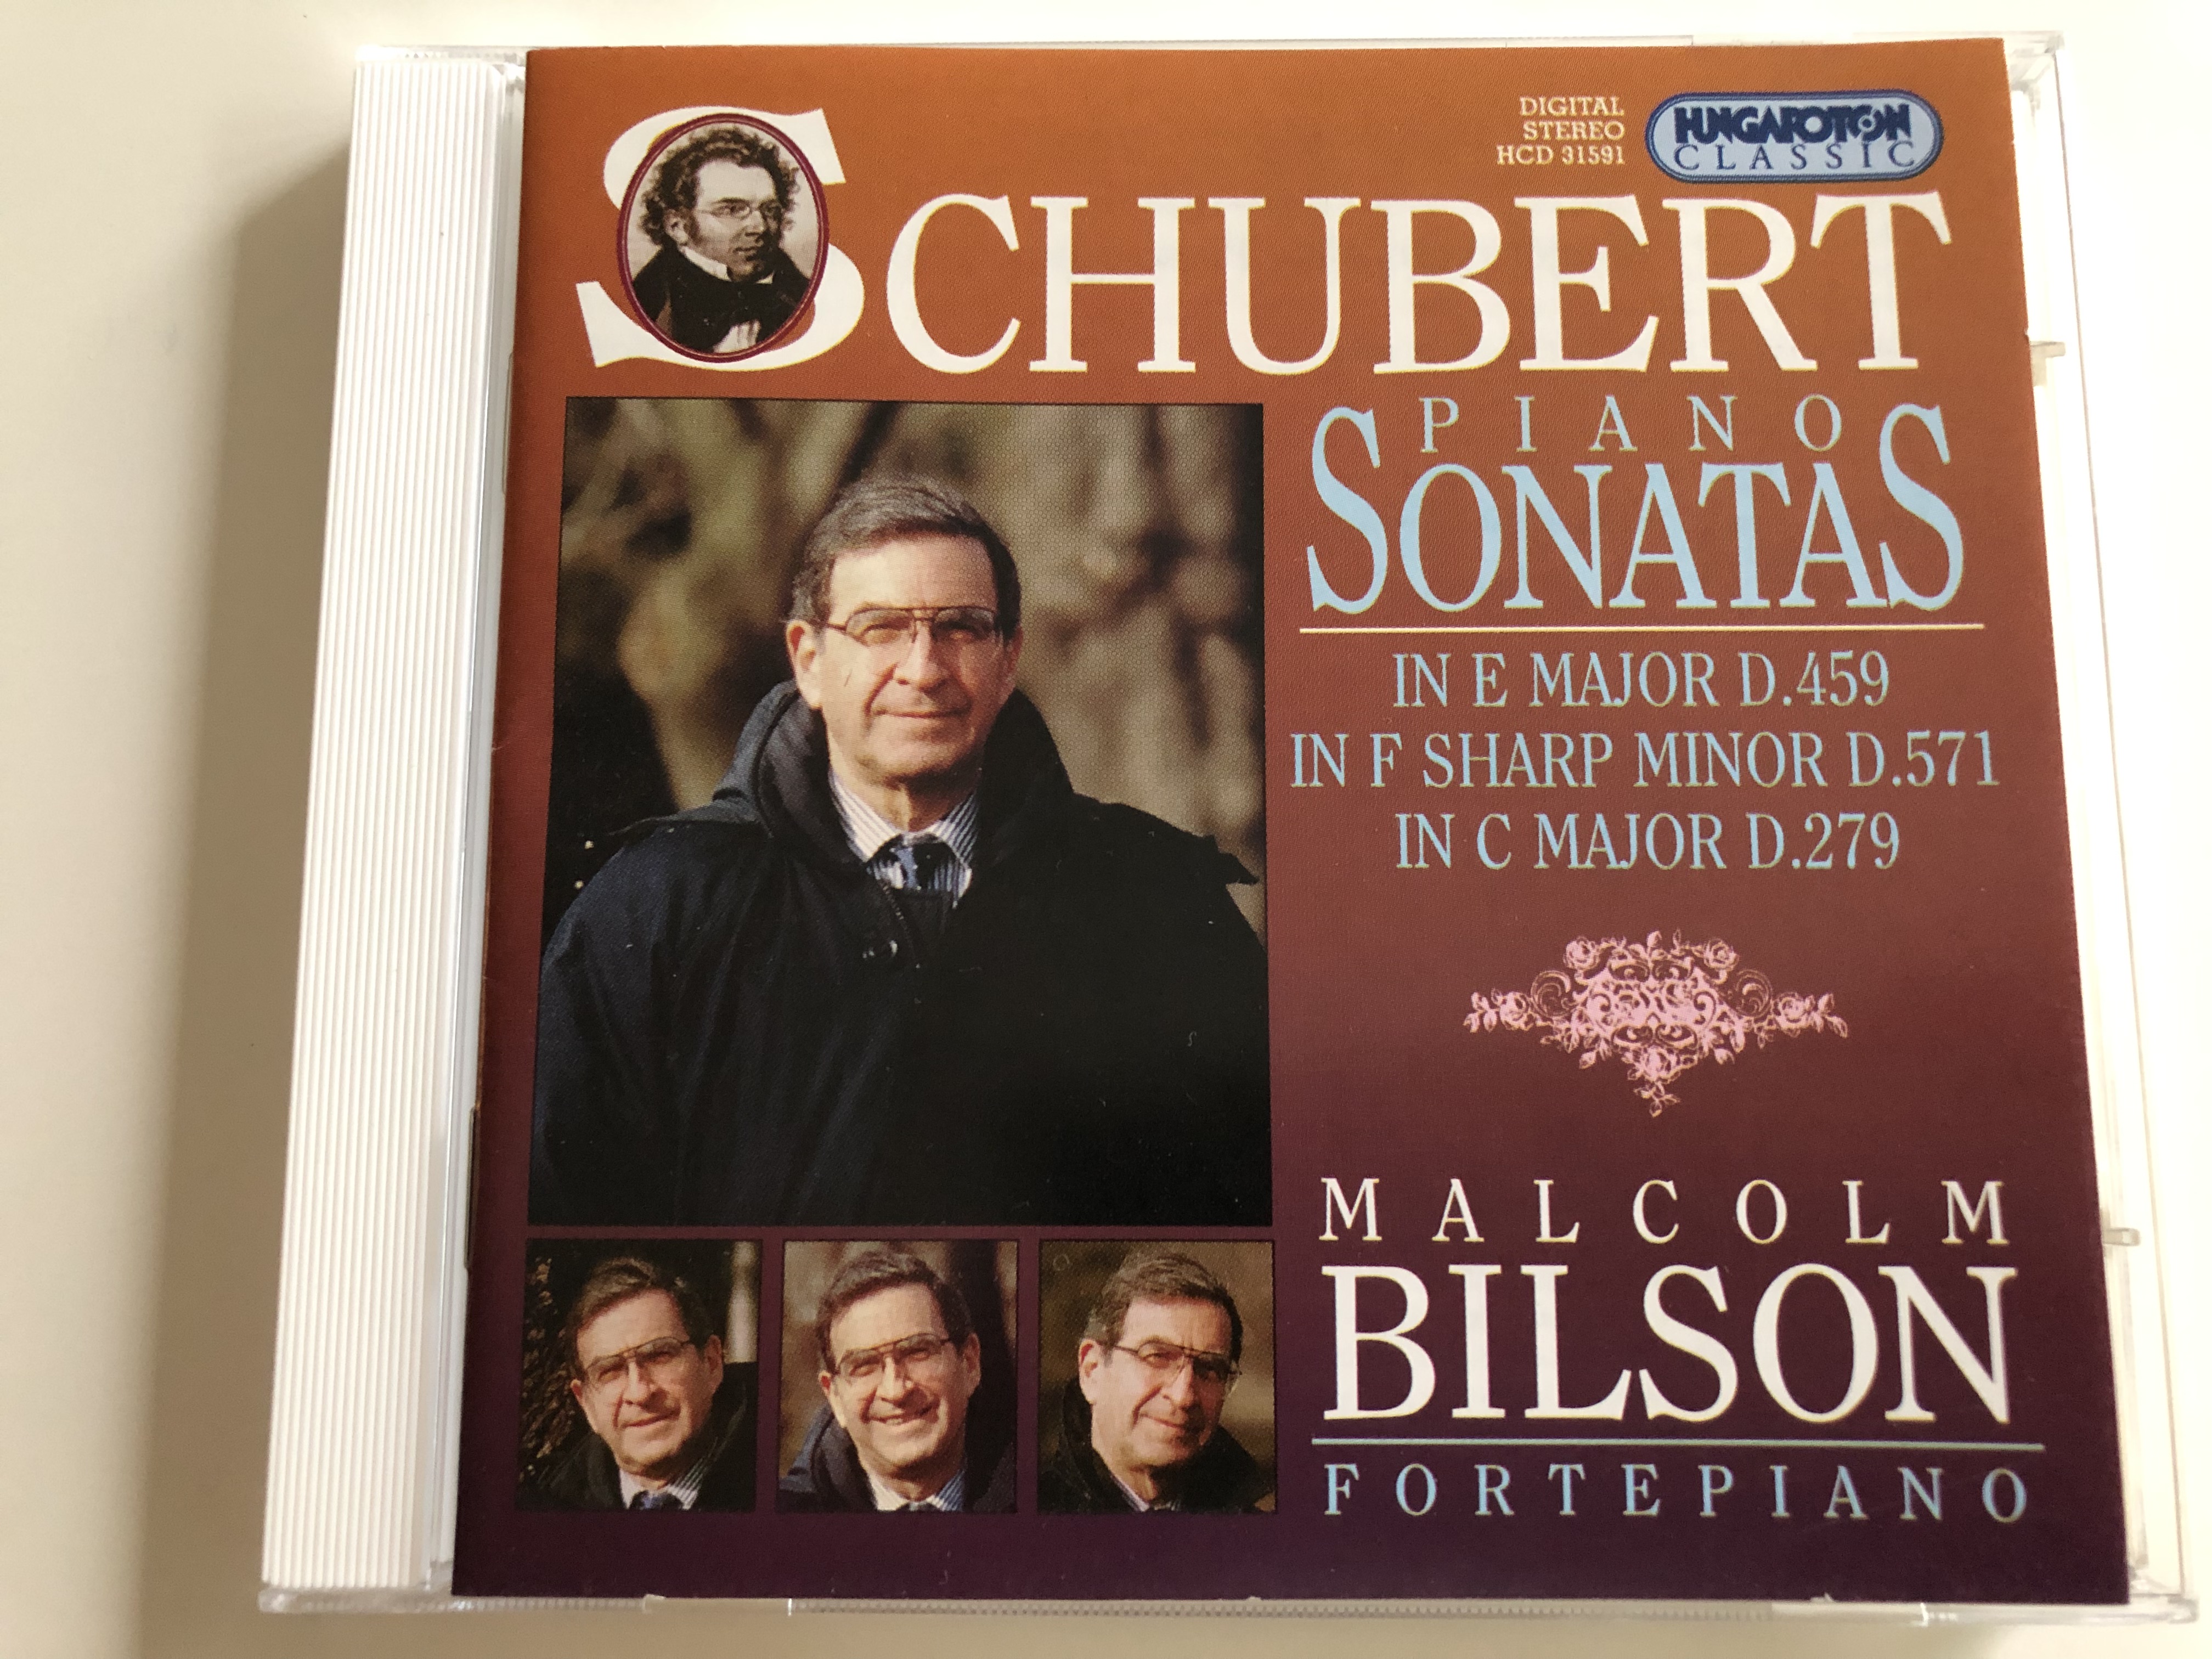 schubert-piano-sonatas-vol.-6-in-e-major-d.459-in-f-sharp-minor-d.571-in-c-major-d.279-malcolm-bilson-fortepiano-hungaroton-classic-audio-cd-2000-hcd-31591-1-.jpg